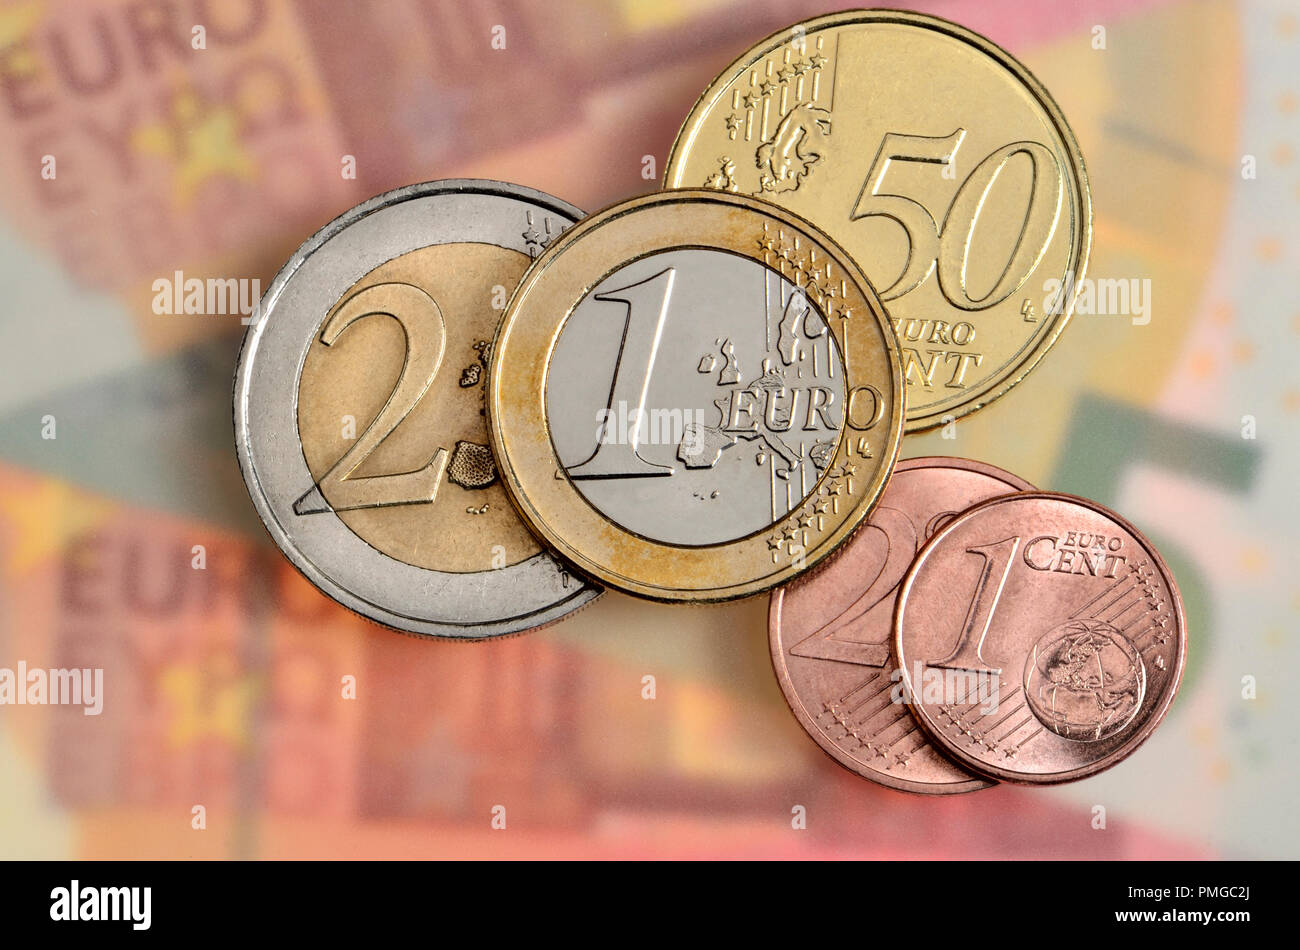 Pièces en euro de l'original 12 membres de la zone euro Banque D'Images